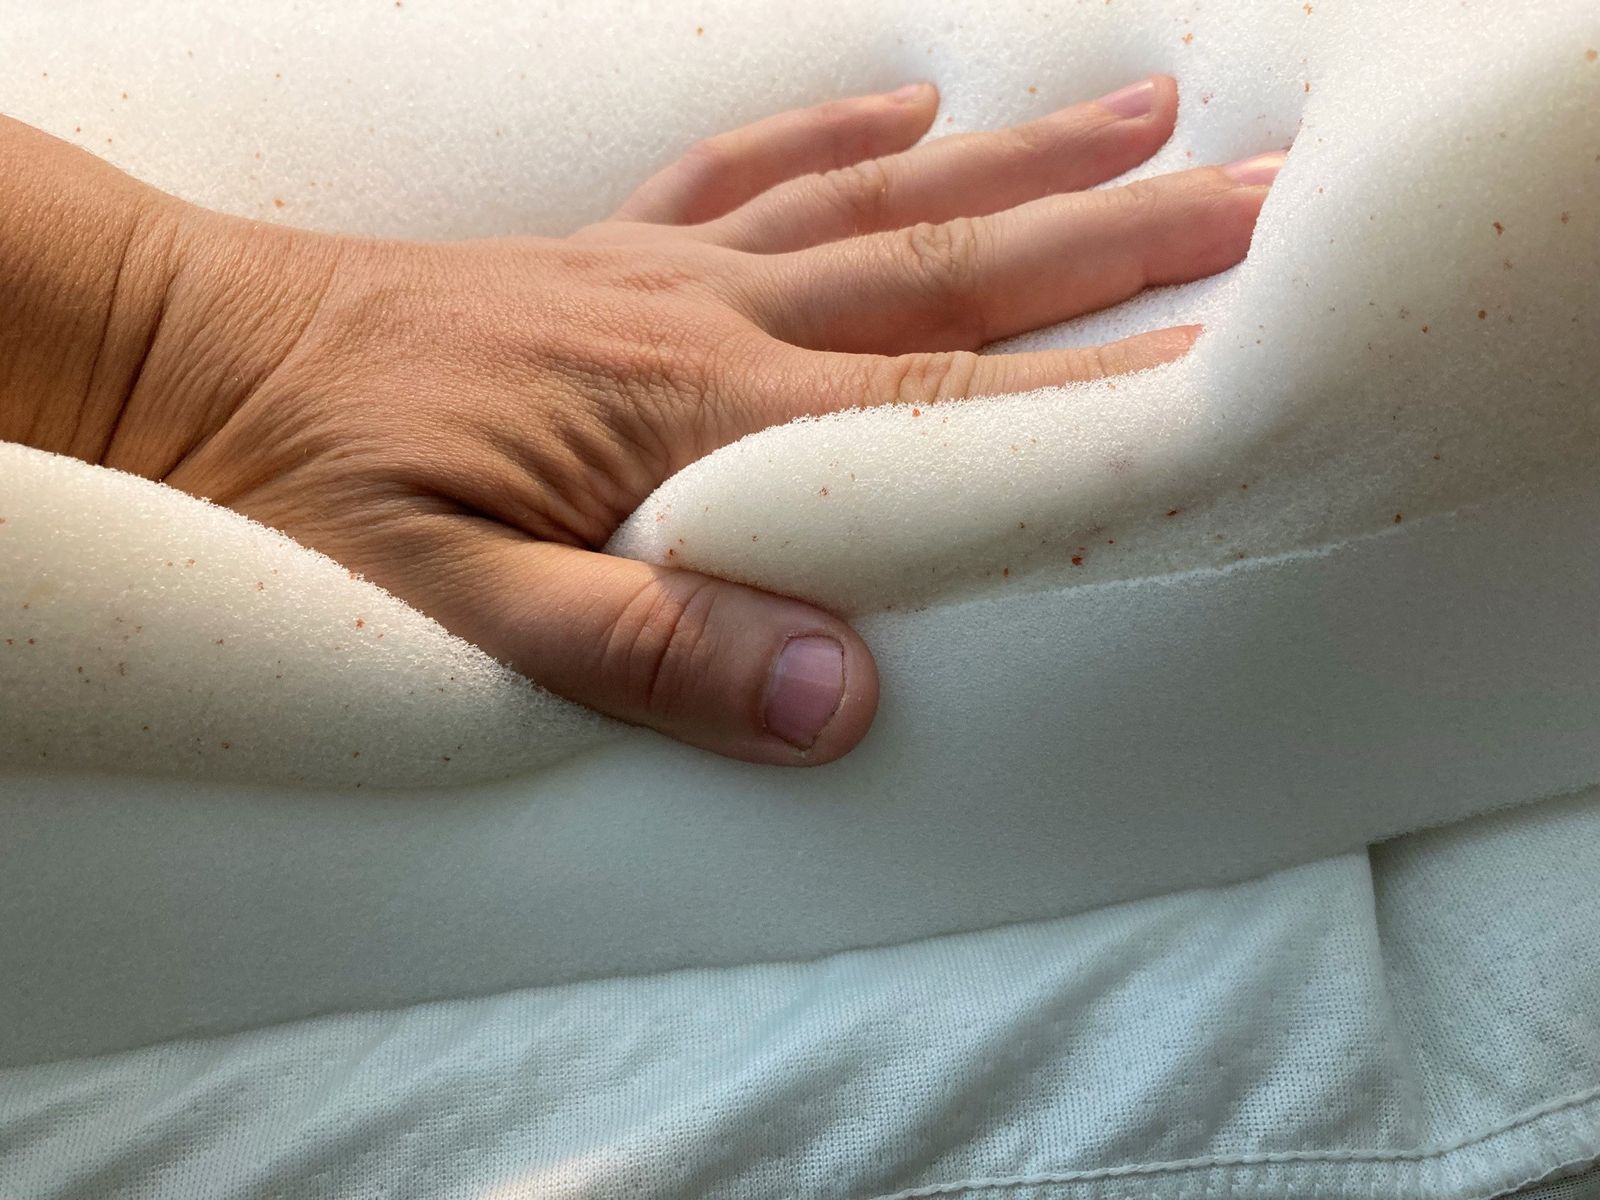 allswell mattress topper review reddit